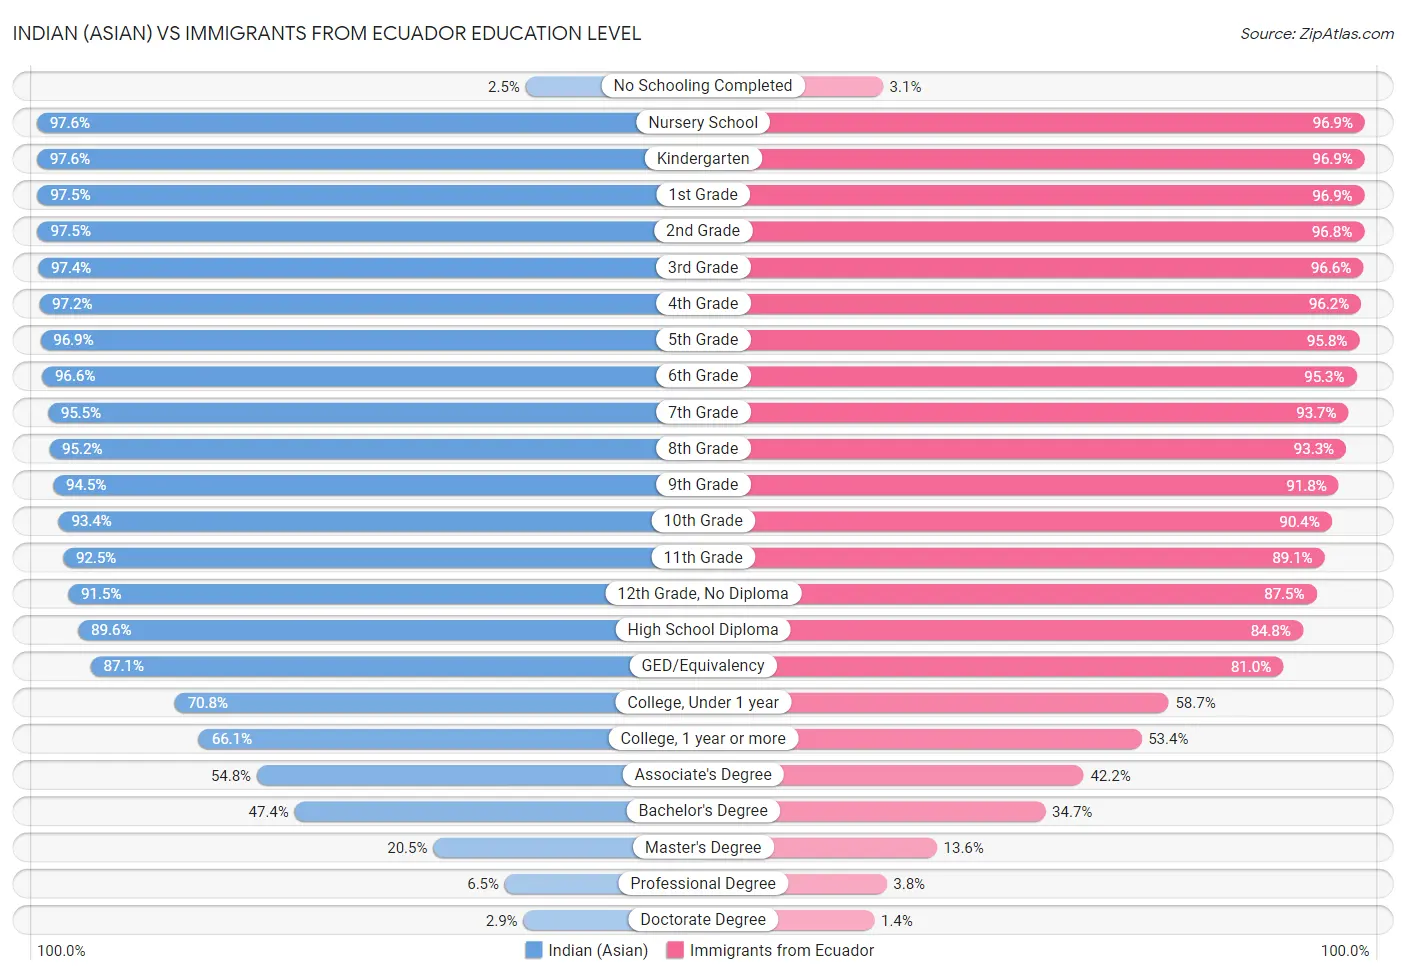 Indian (Asian) vs Immigrants from Ecuador Education Level